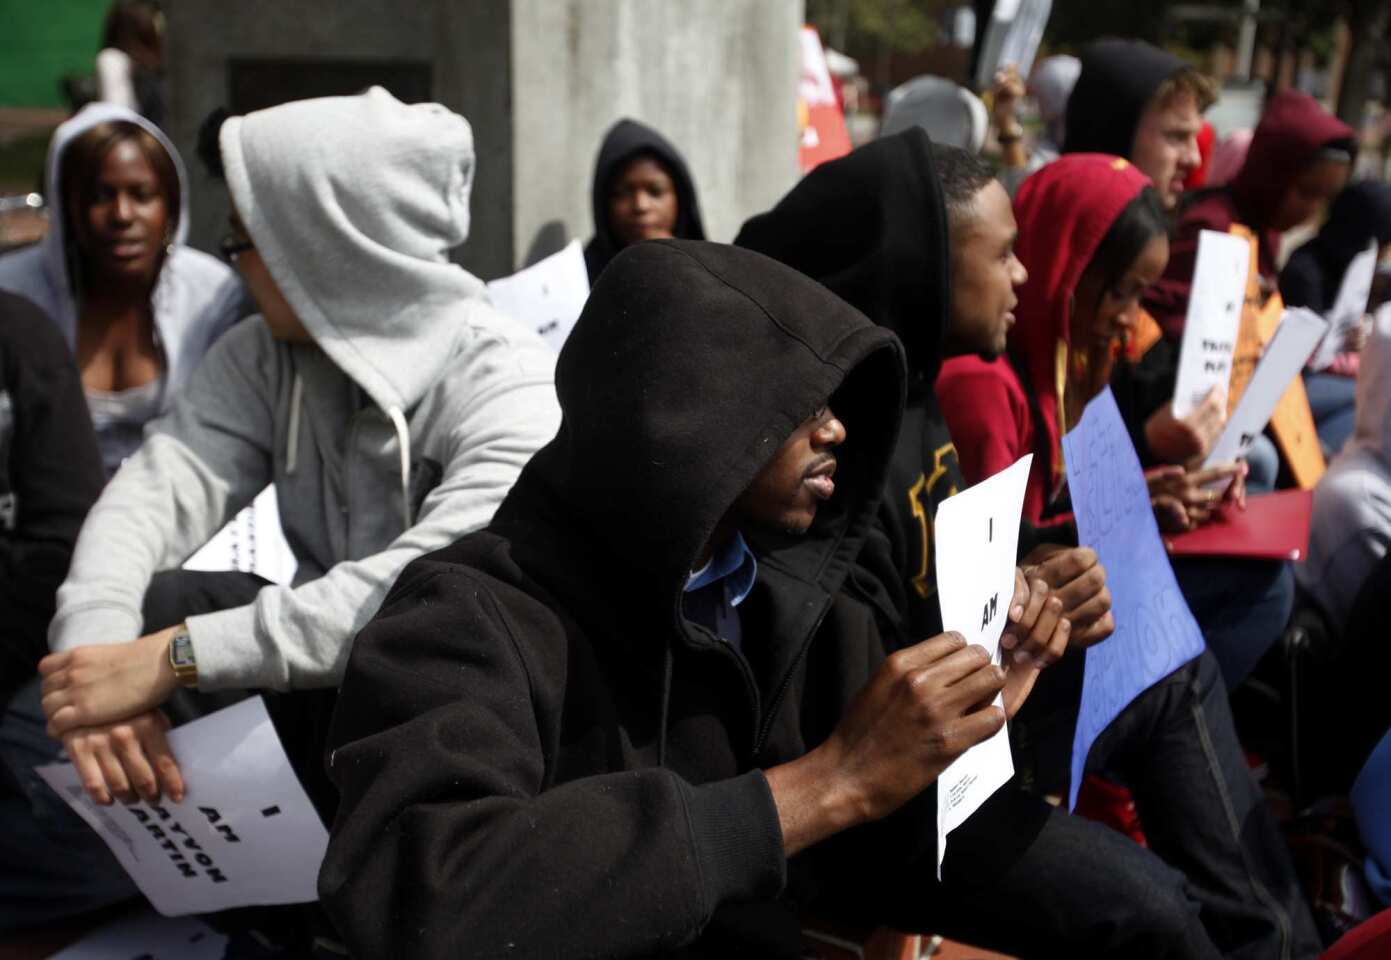 Flash mob for Trayvon Martin at USC